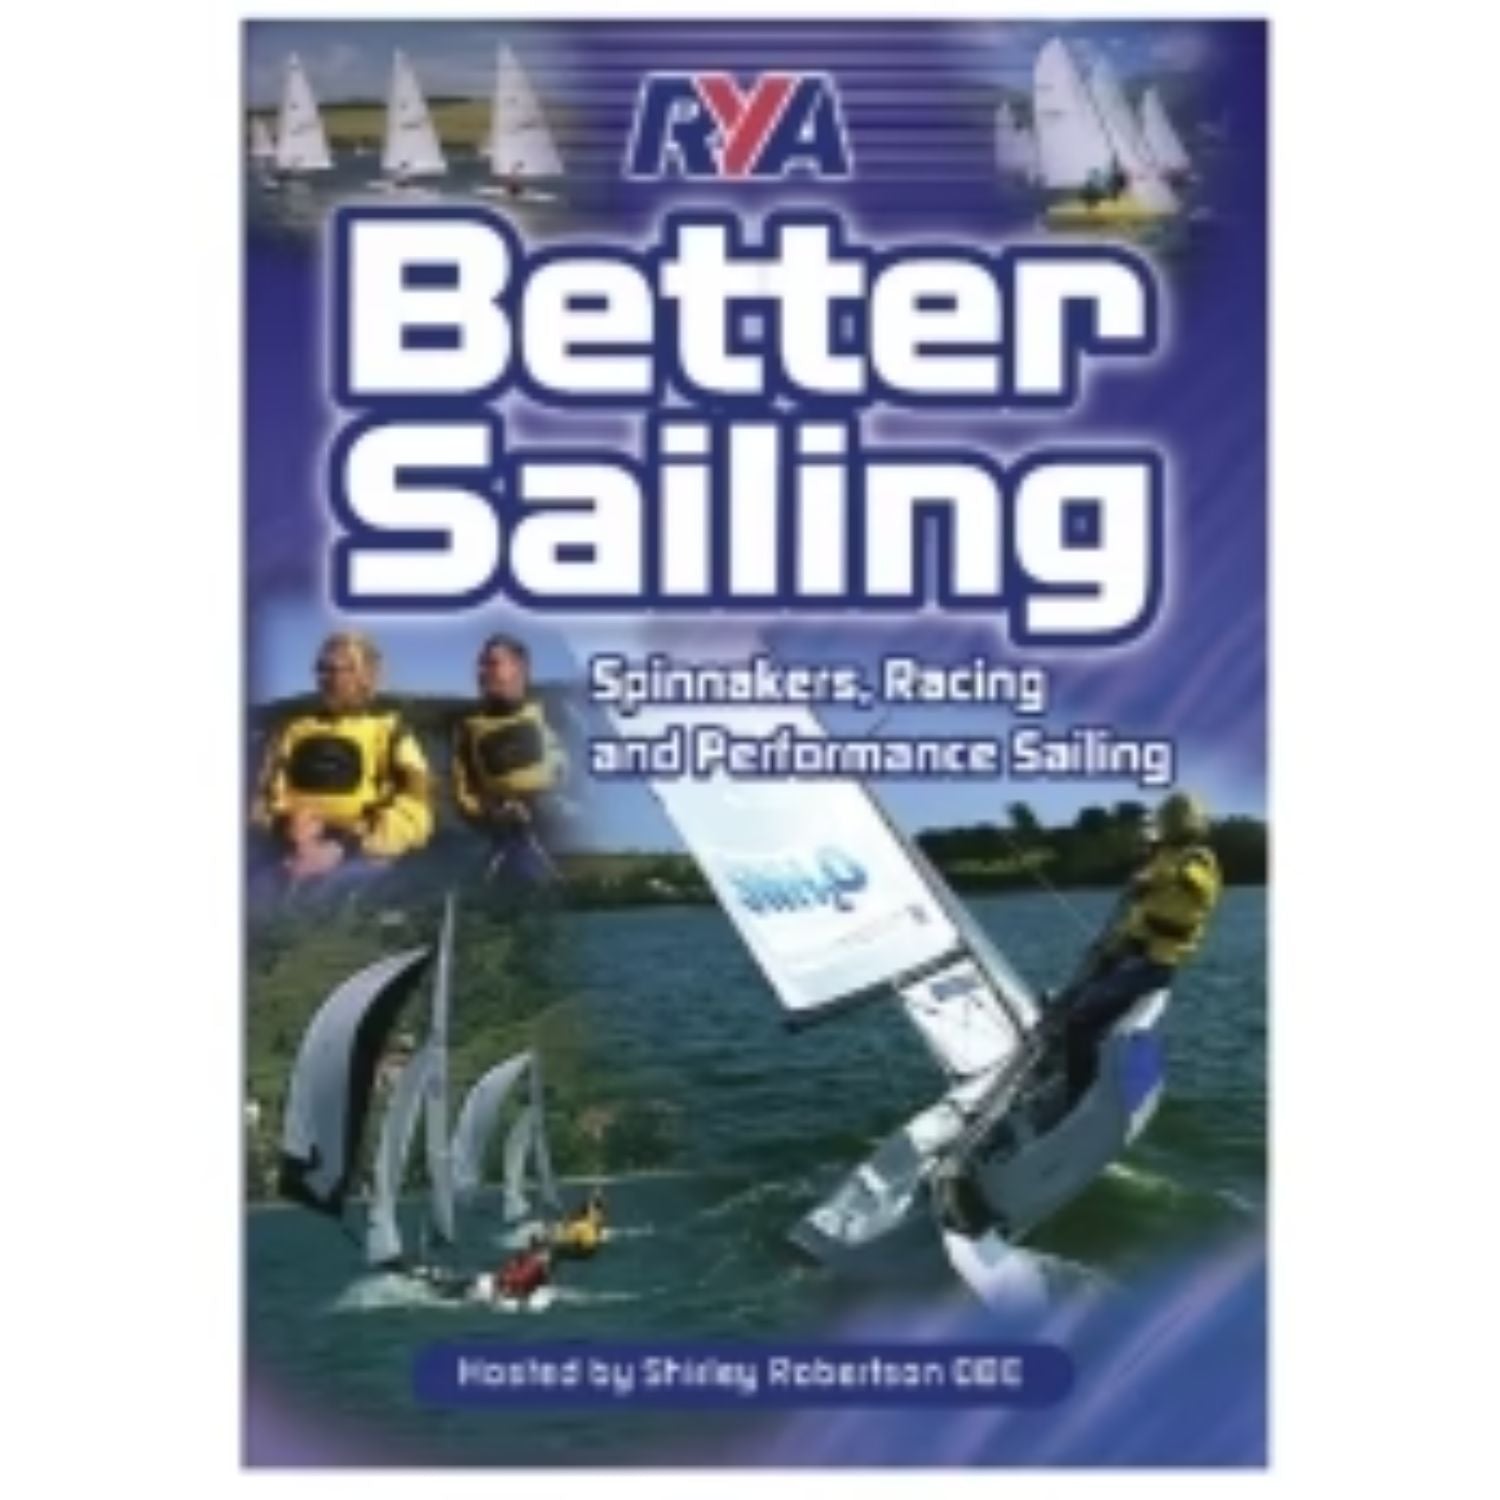 RYA Better Sailing DVD